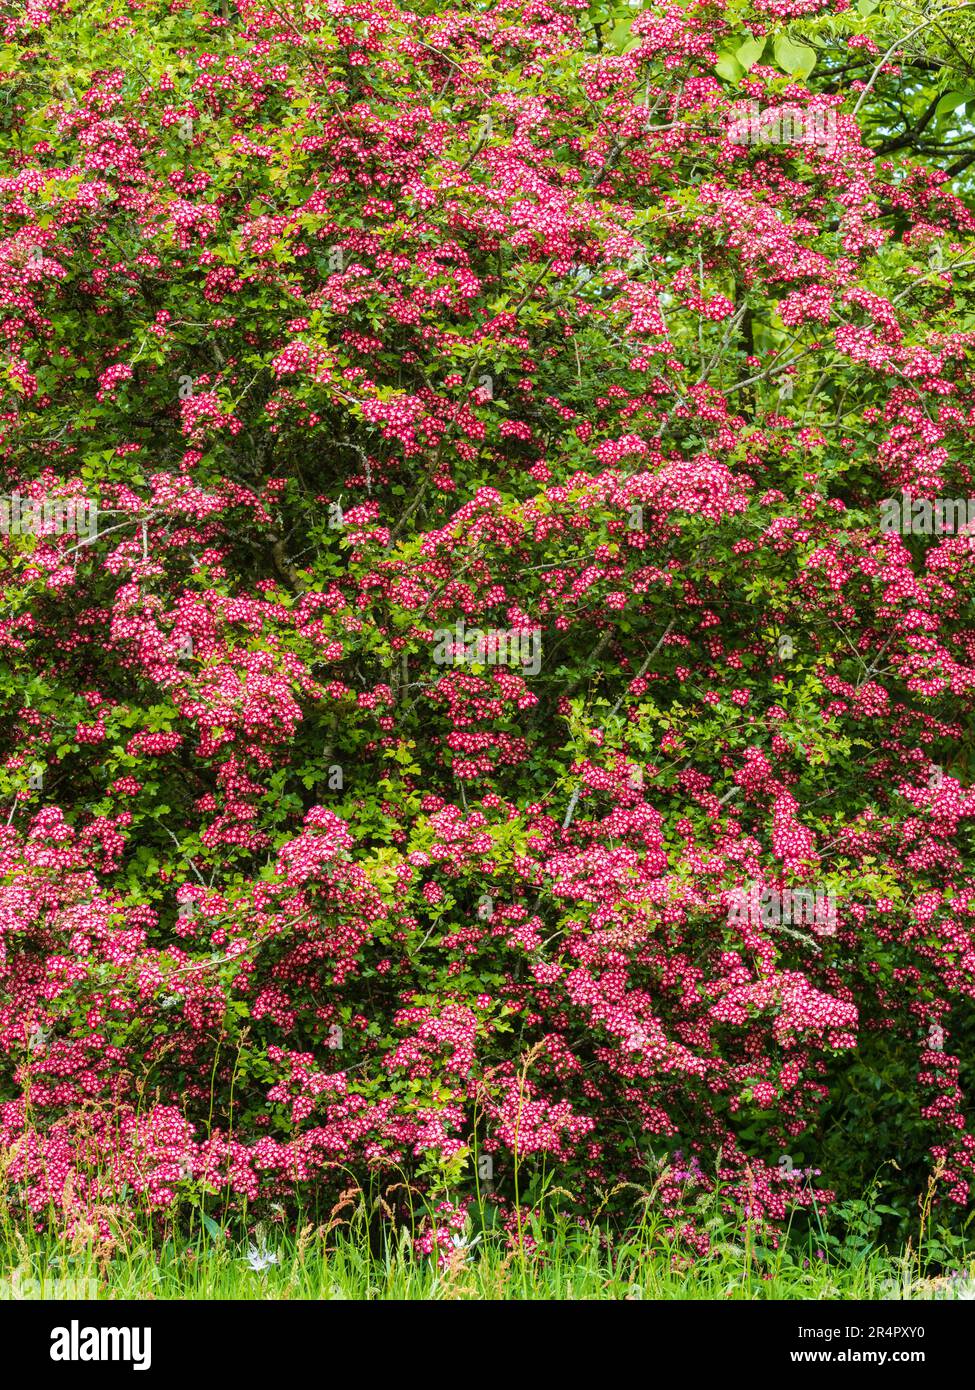 Massed red flowers of the ornamental hawthorn tree, Crataegus laevigata 'Paul's Scarlet' Stock Photo